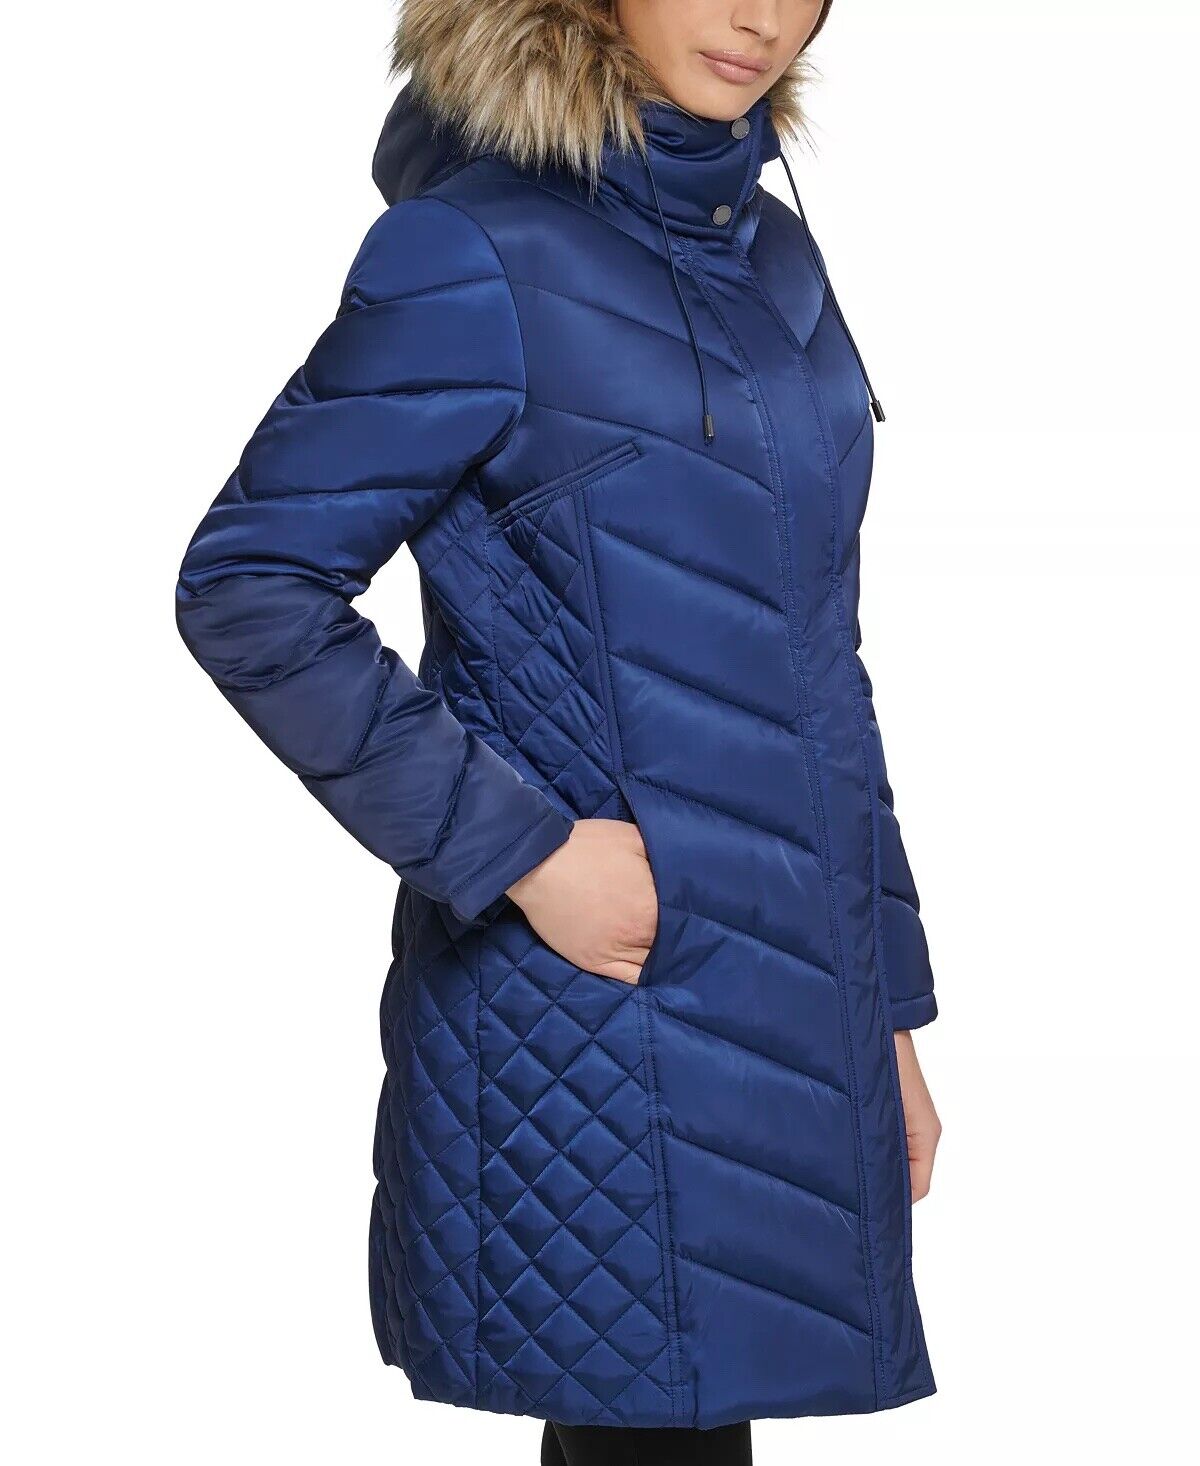 Kenneth Cole Women's Faux-Fur-Trim Hooded Puffer Coat Navy Blue Medium